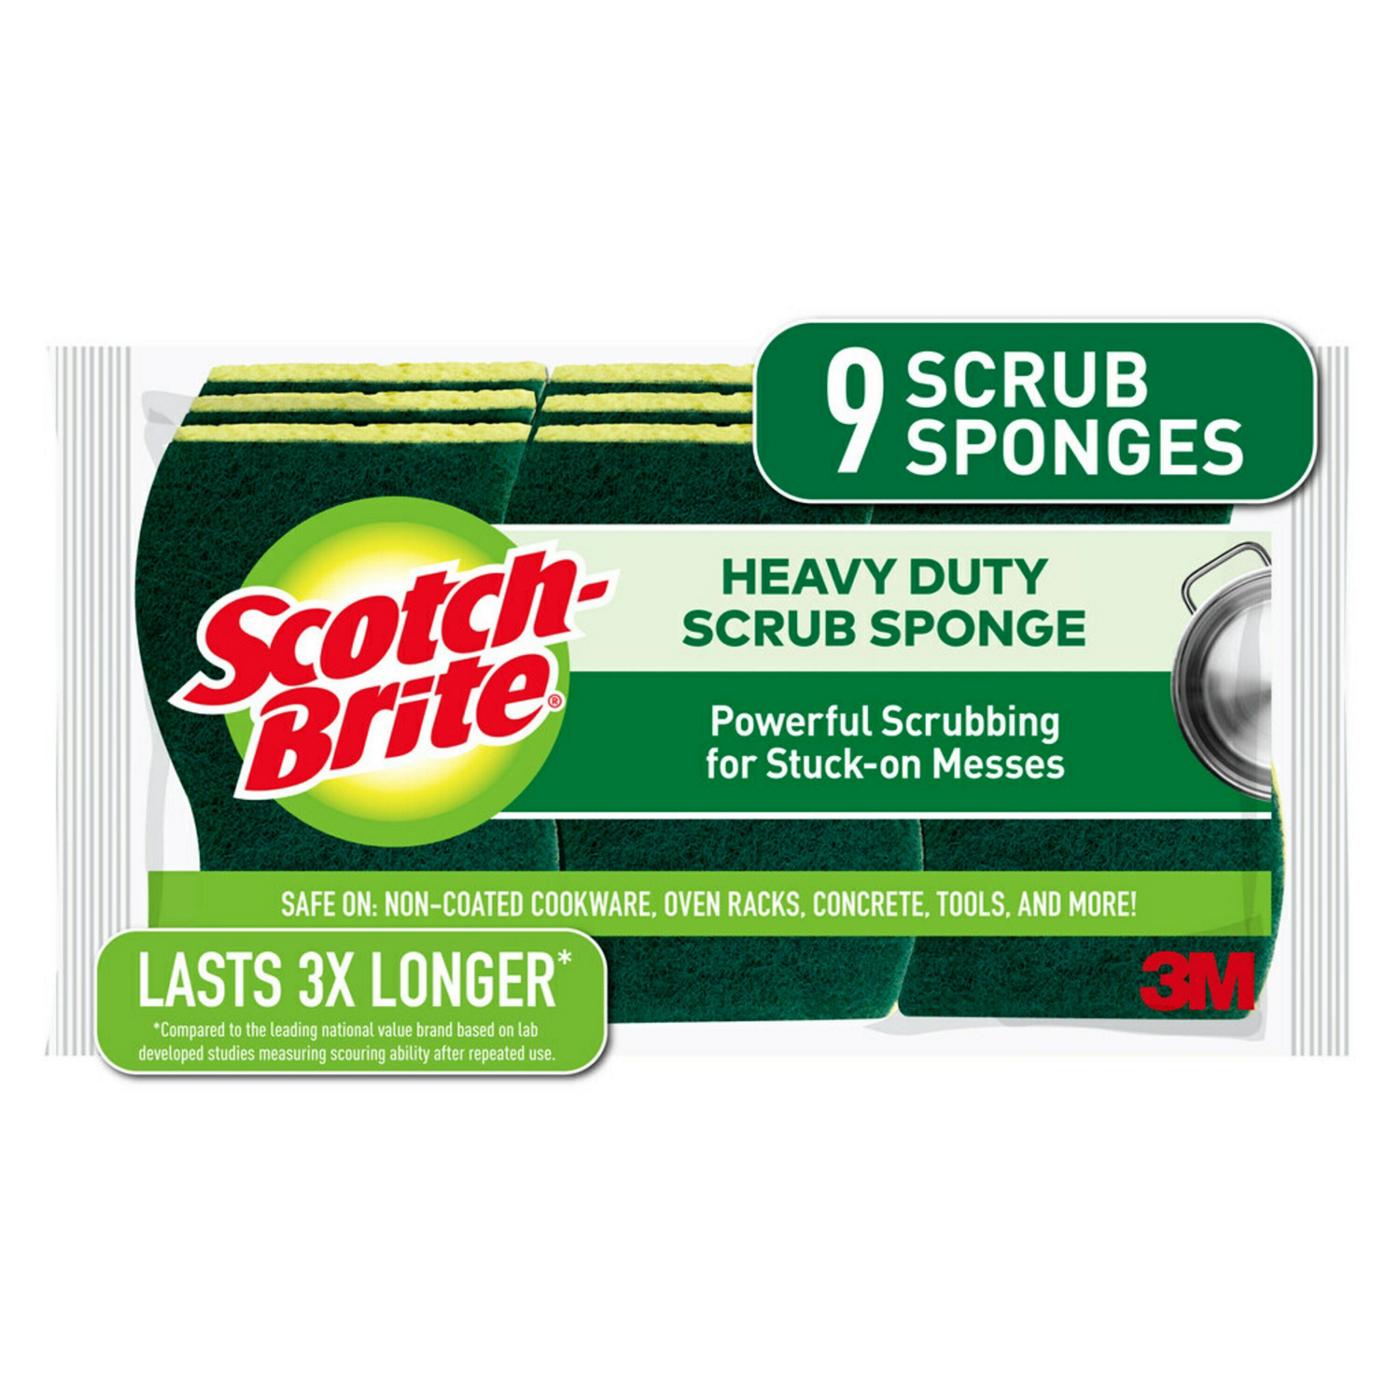 Scotch-Brite Heavy Duty Scrub Sponges; image 2 of 3